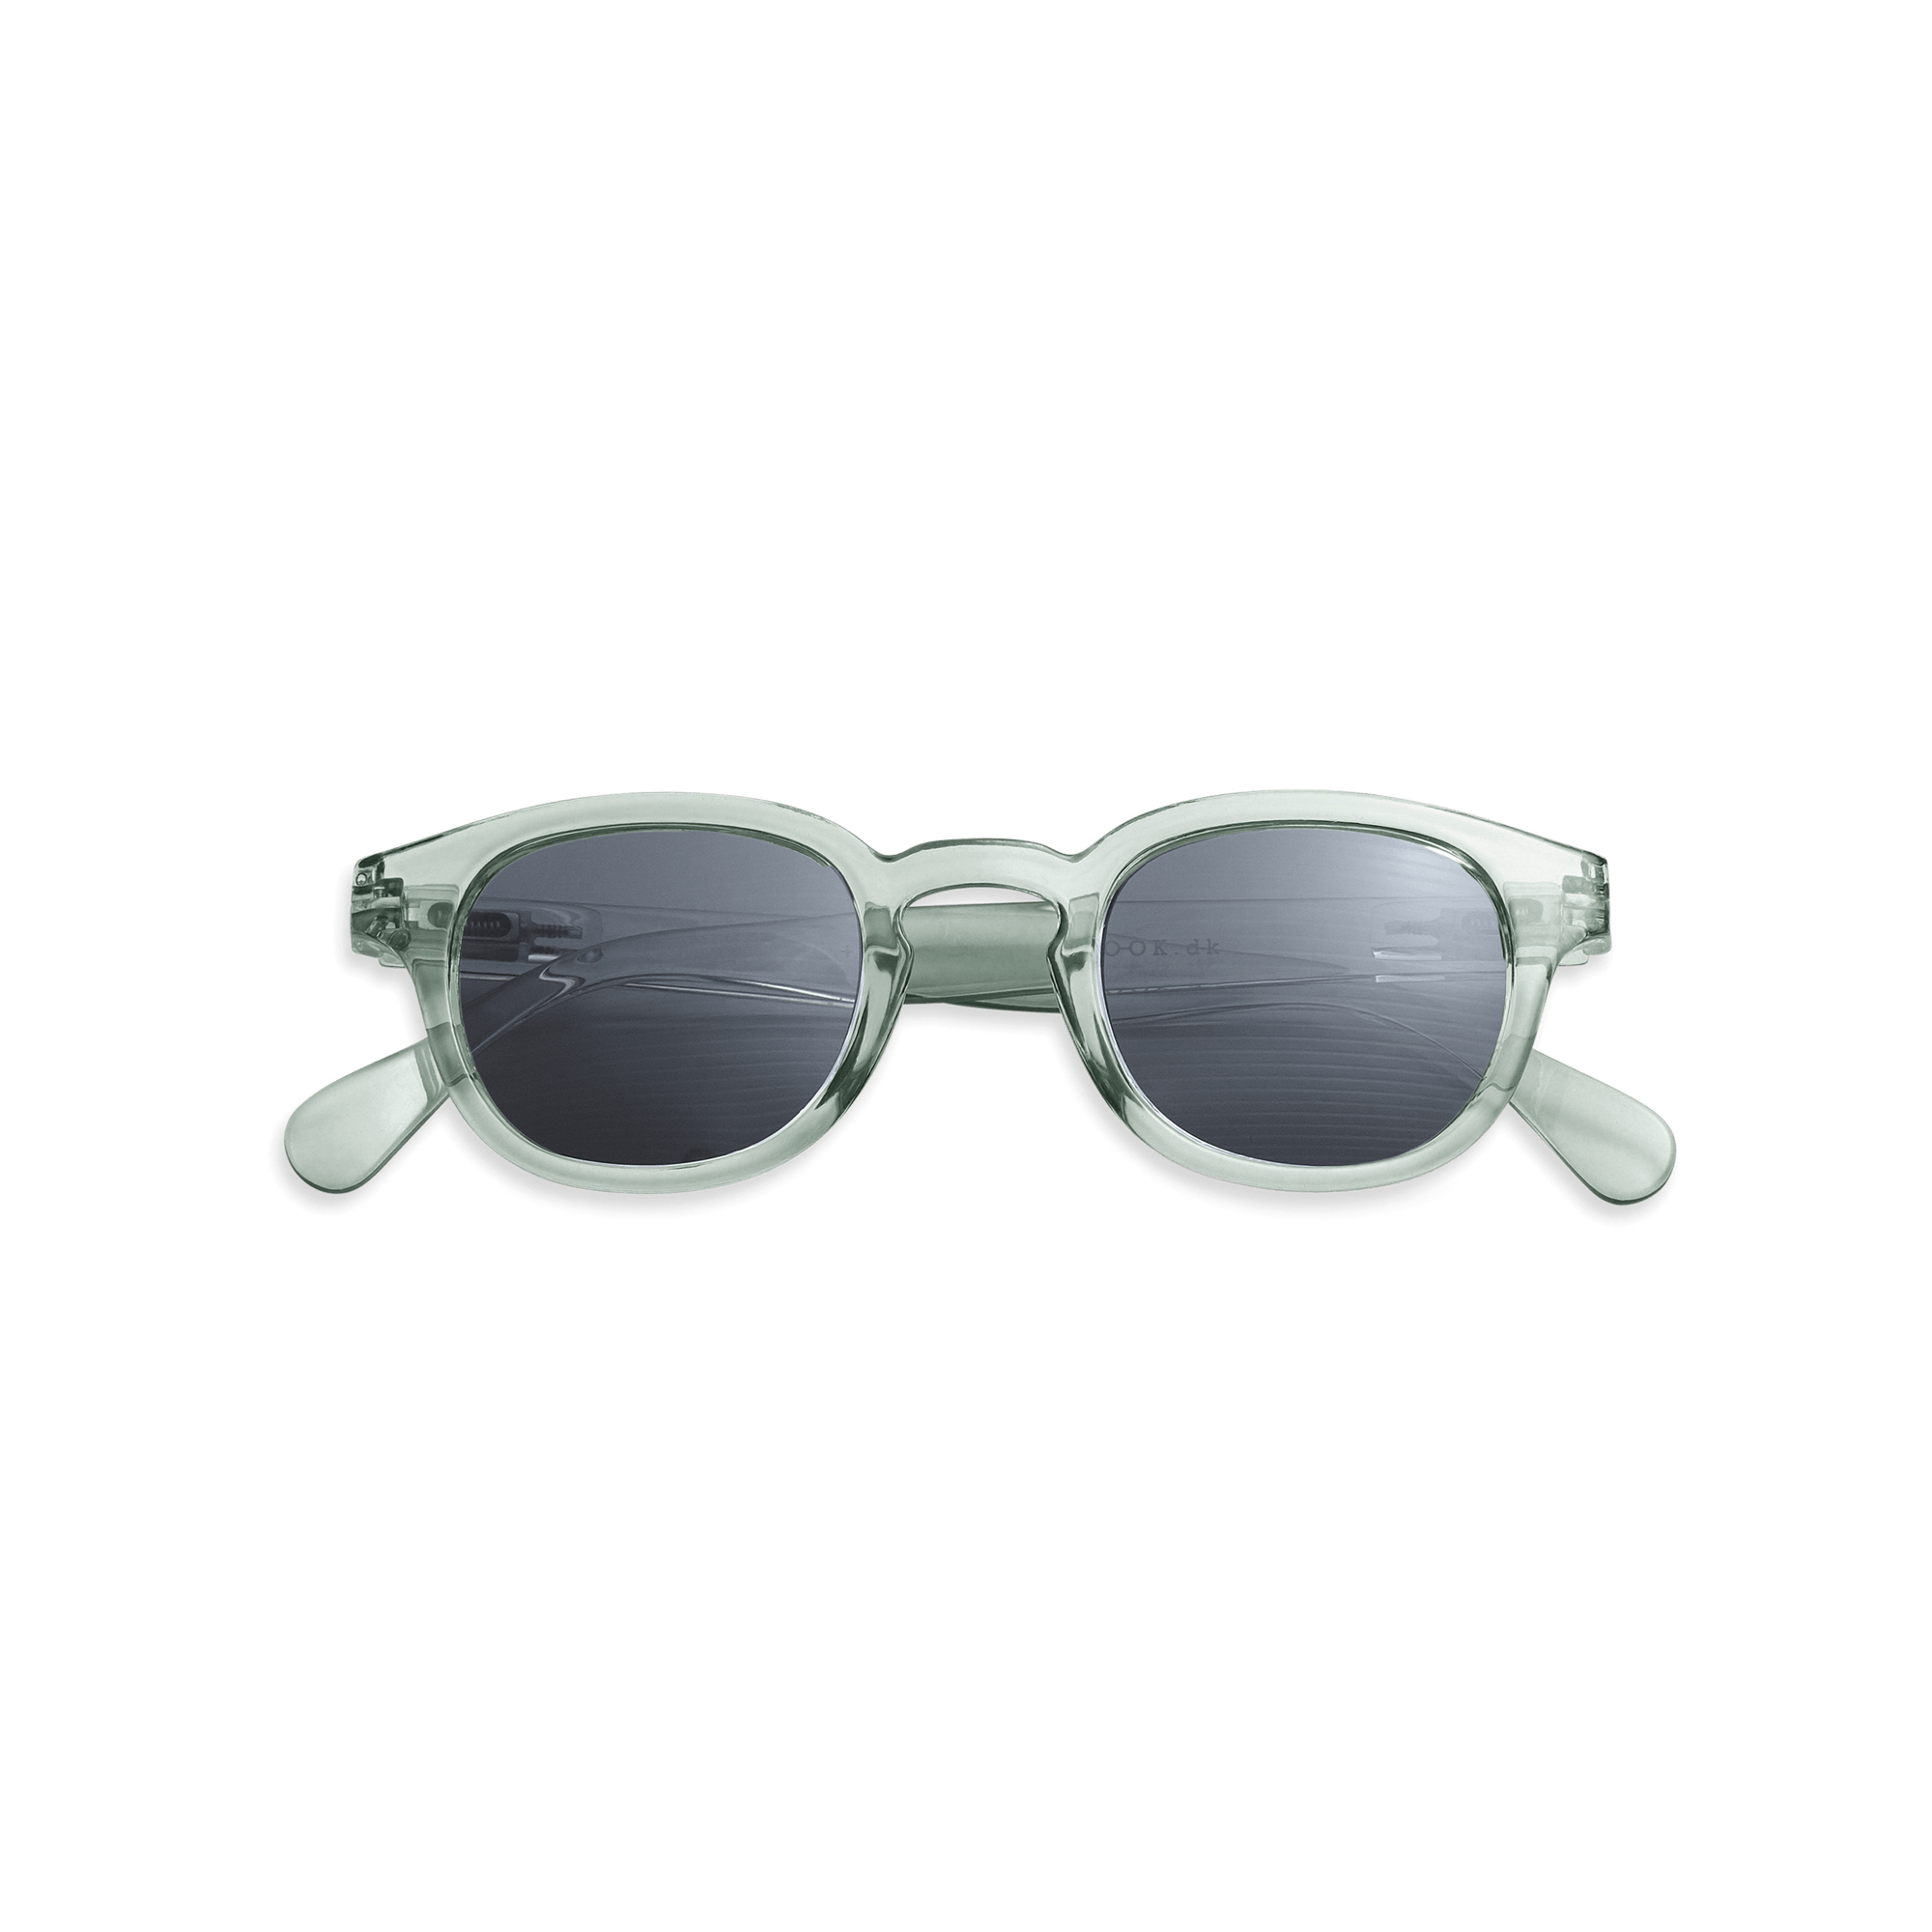 Minus sunglasses Type C - grass